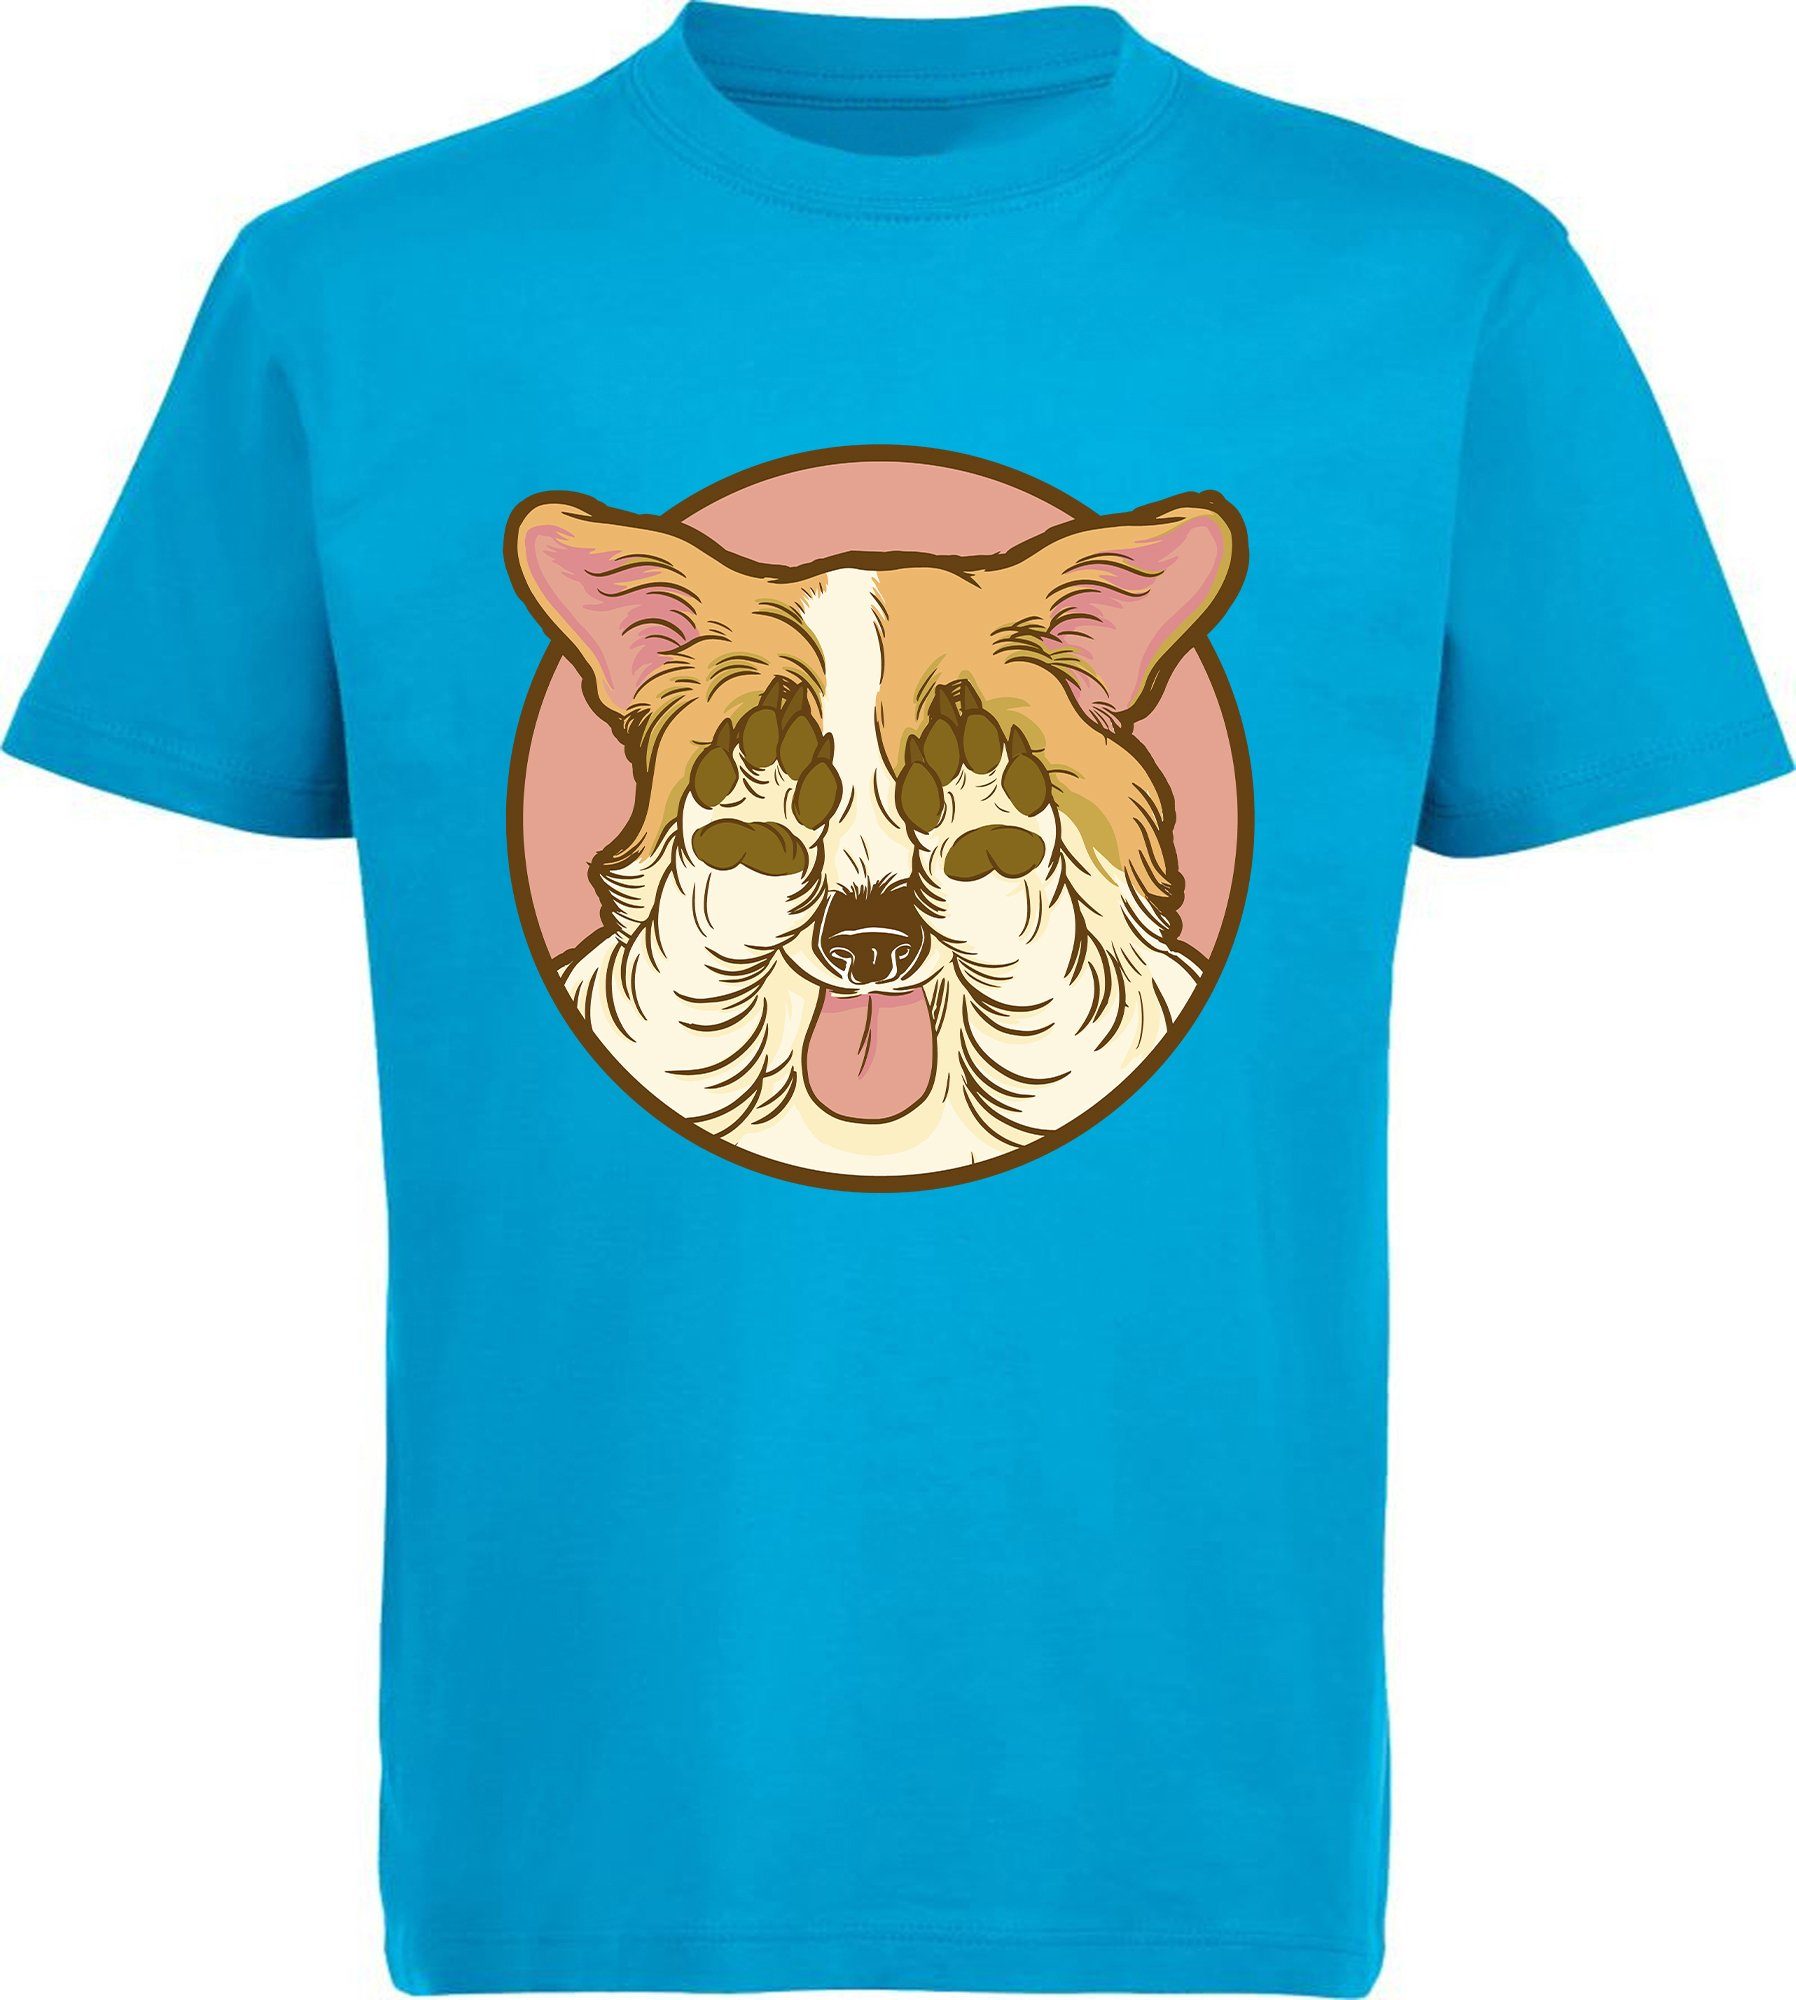 MyDesign24 Print-Shirt bedrucktes Kinder Hunde T-Shirt - Corgi der seine Augen zu hält Baumwollshirt mit Aufdruck, i226 aqua blau | T-Shirts